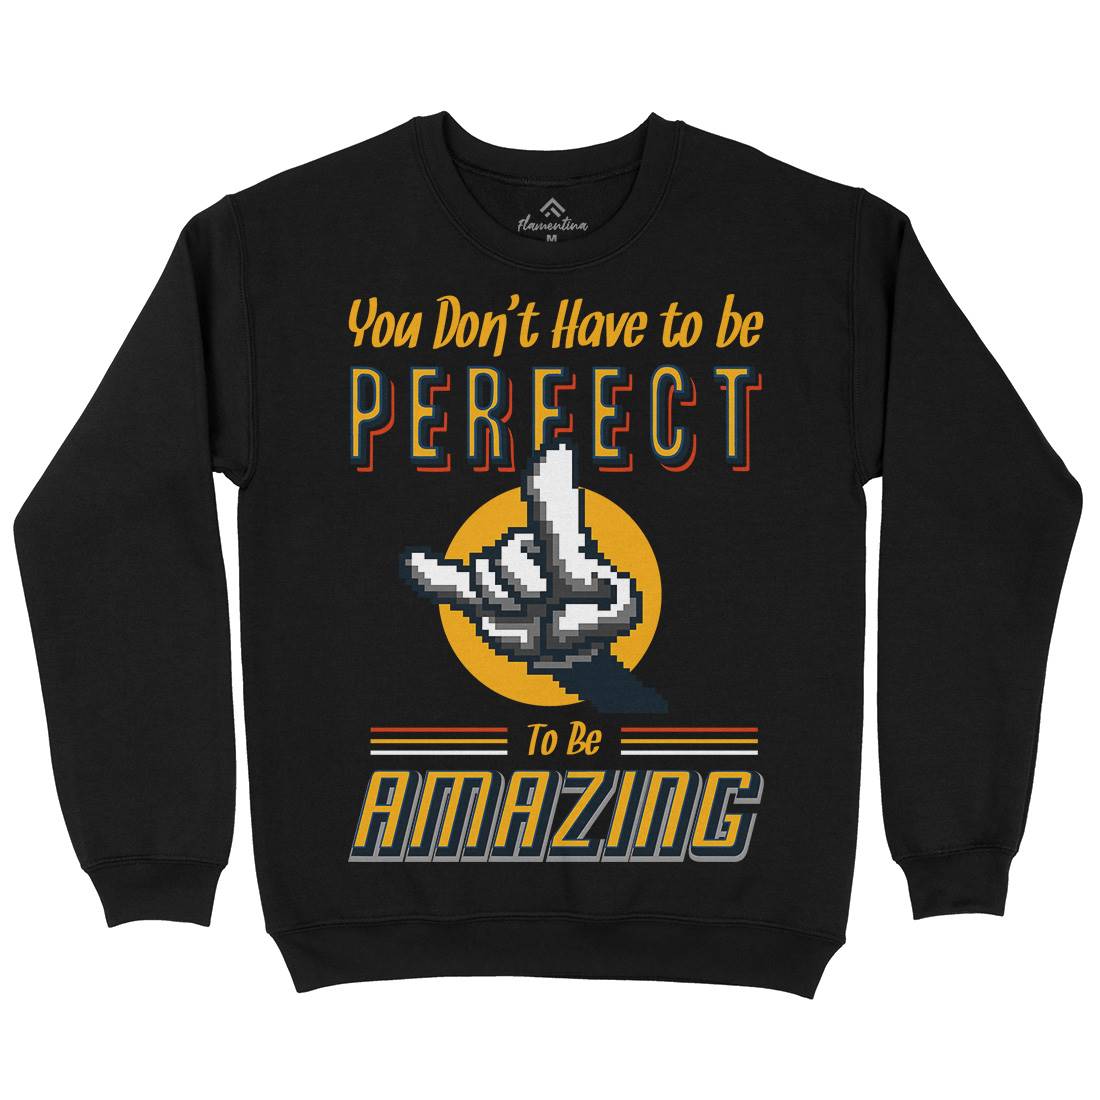 Keep Amazing Kids Crew Neck Sweatshirt Retro B920